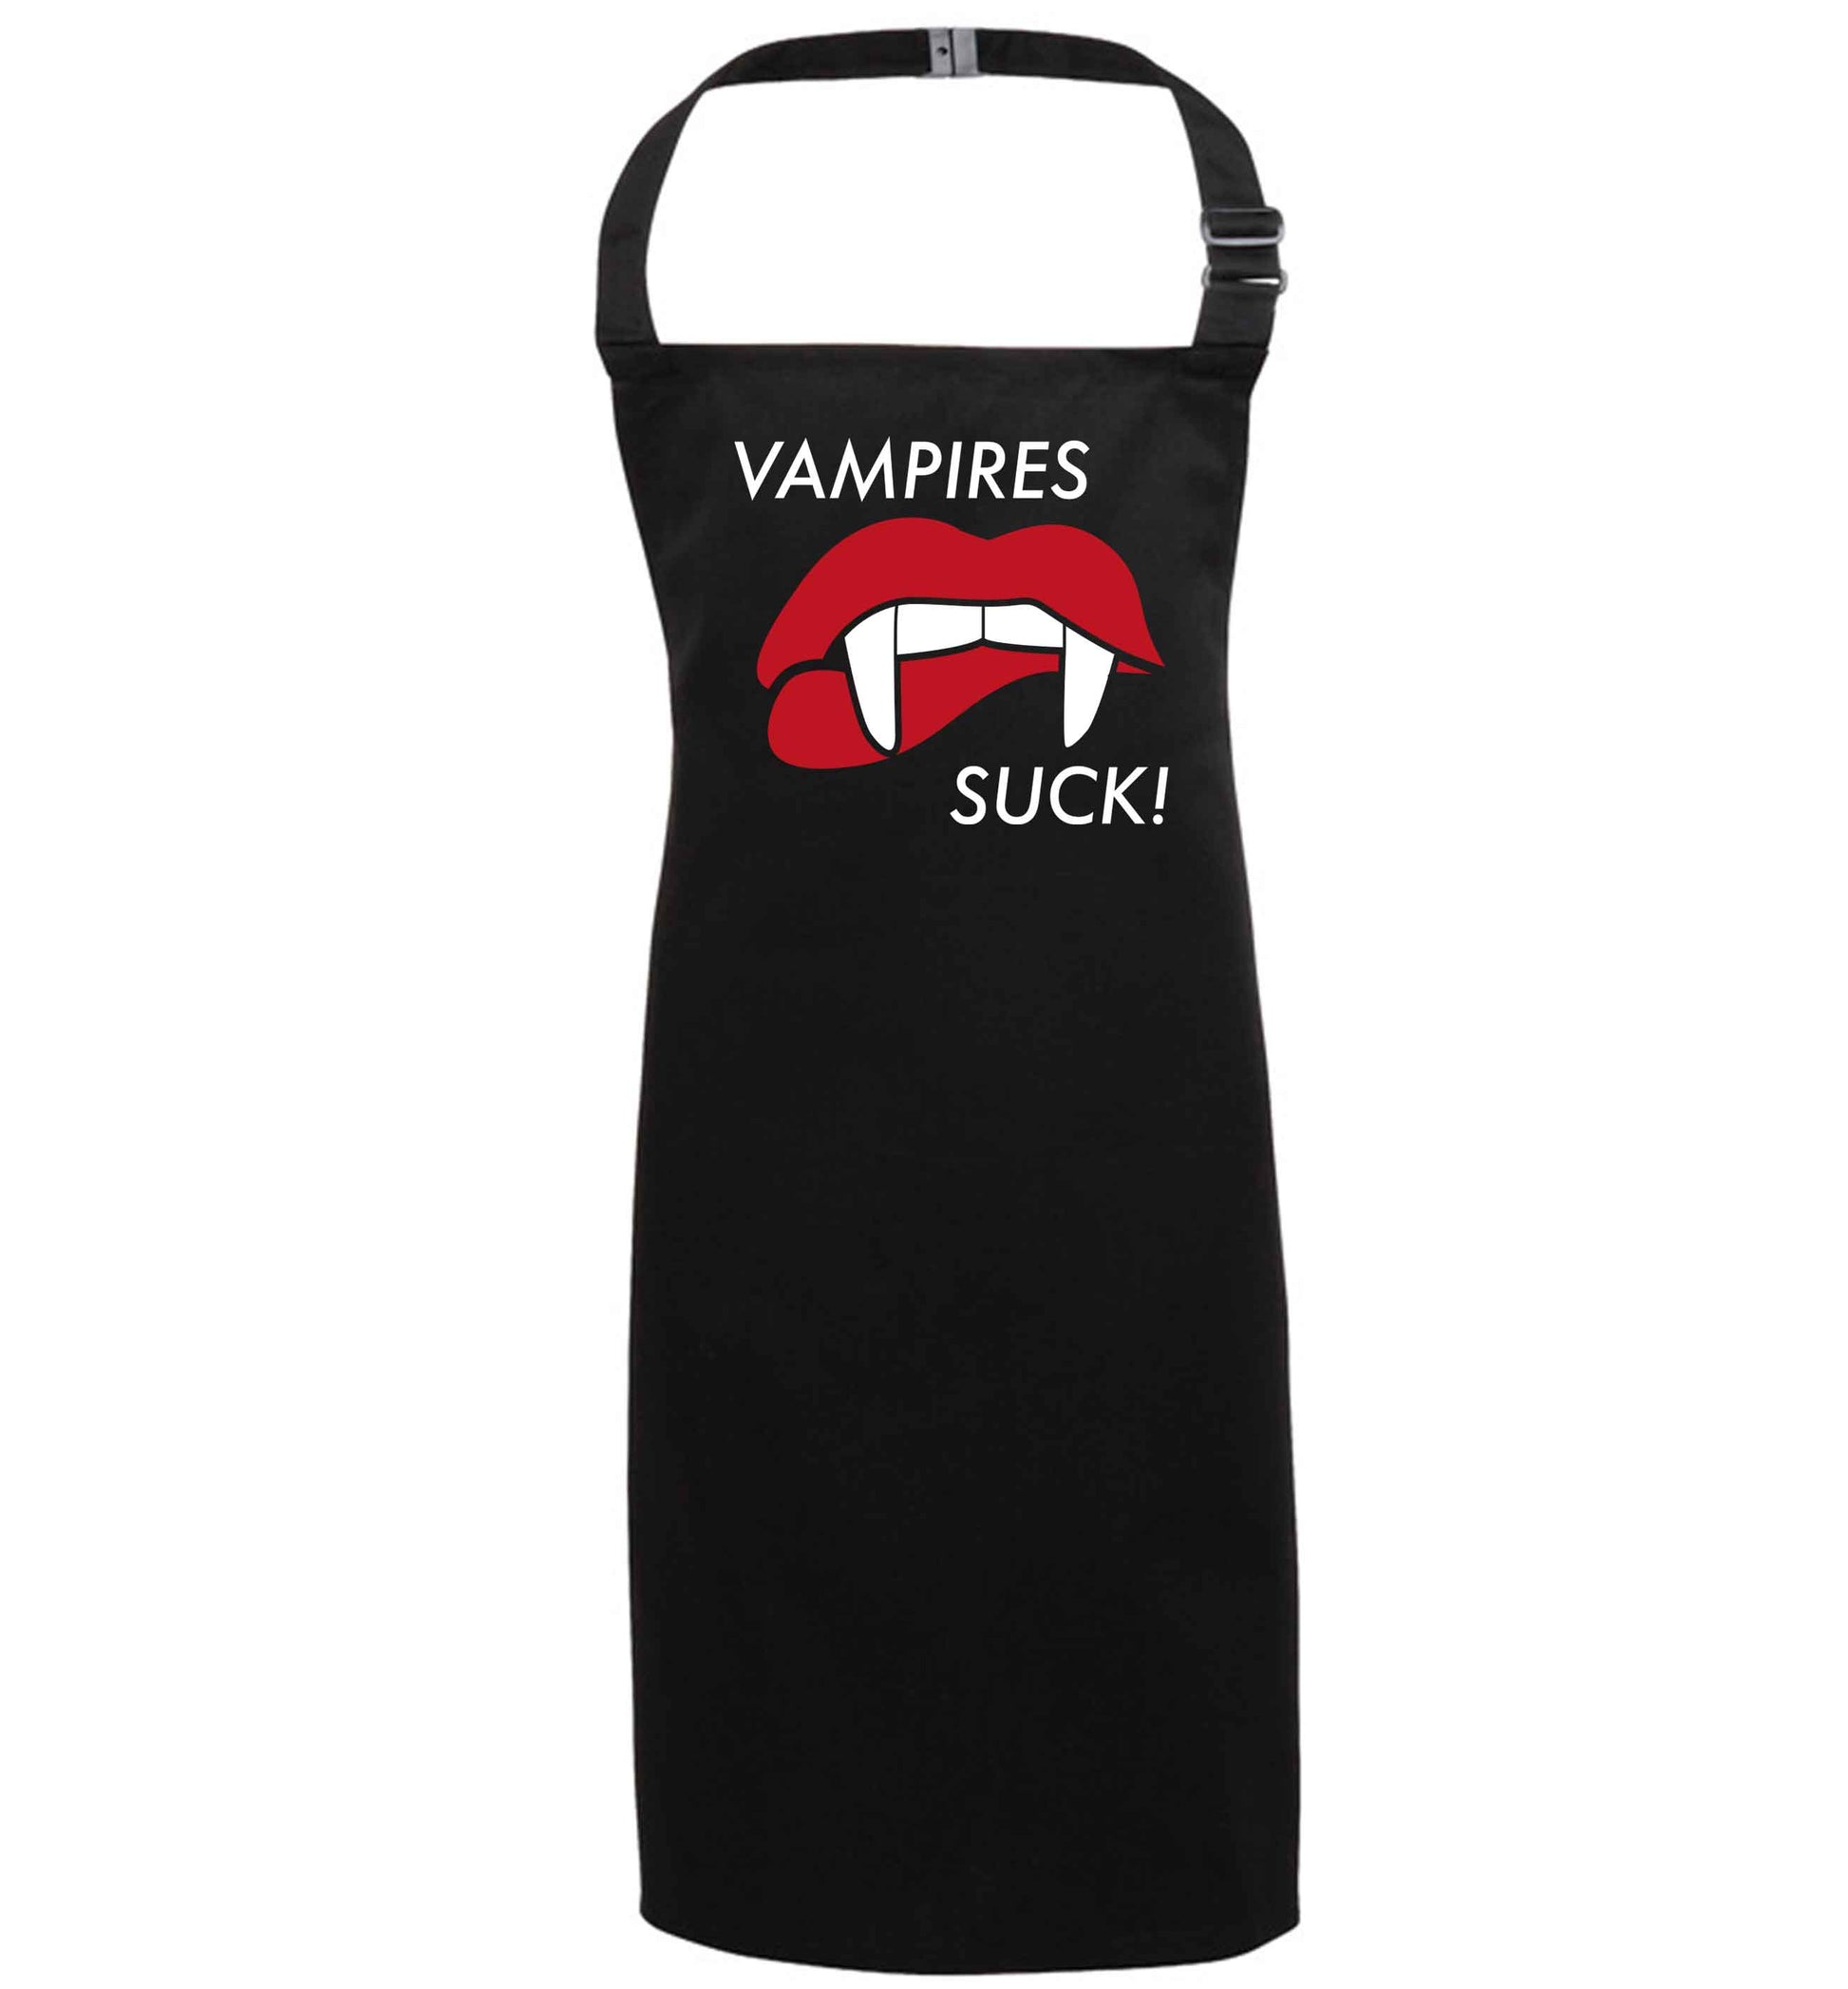 Vampires suck black apron 7-10 years